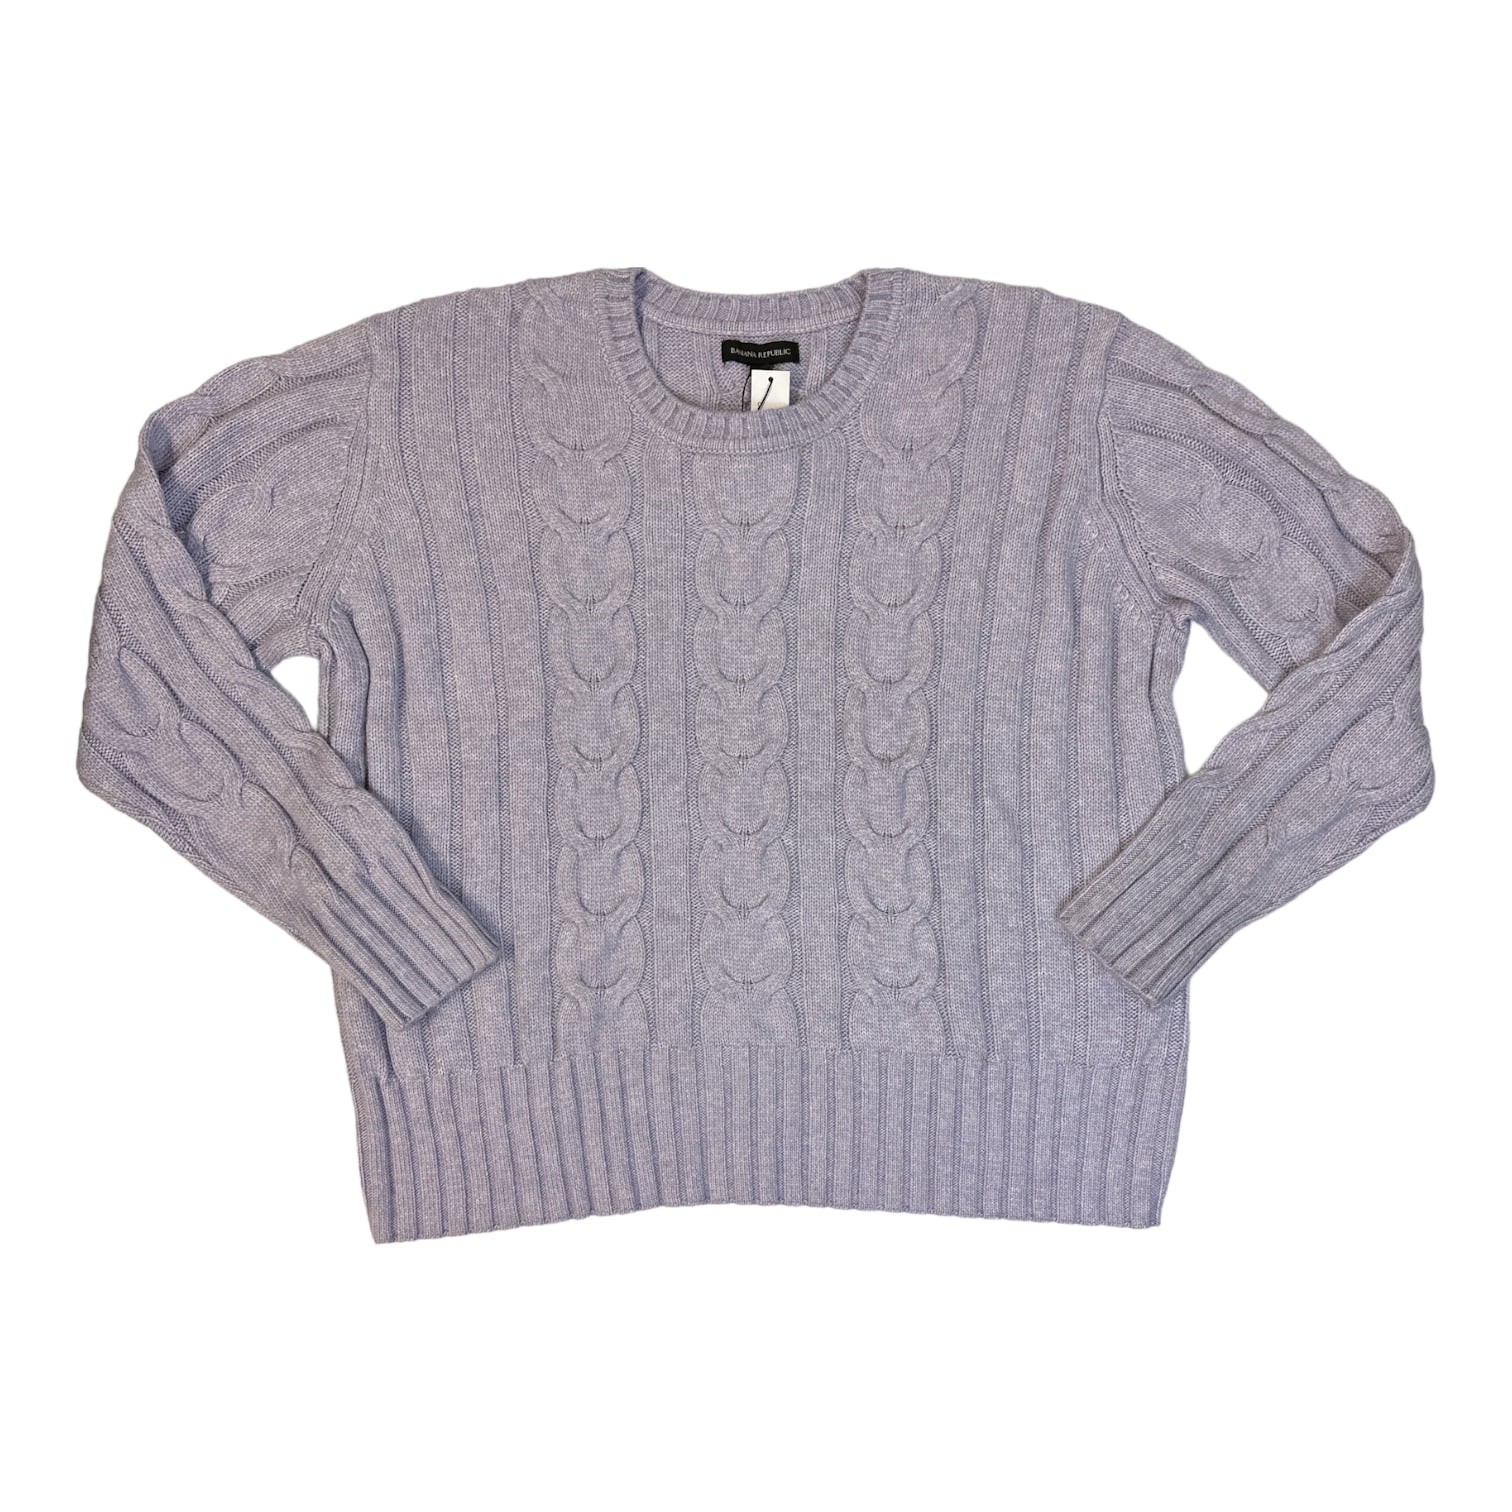 Banana Republic Women's Soft Cable Knit Sweater (Lavender Grey, XXL)